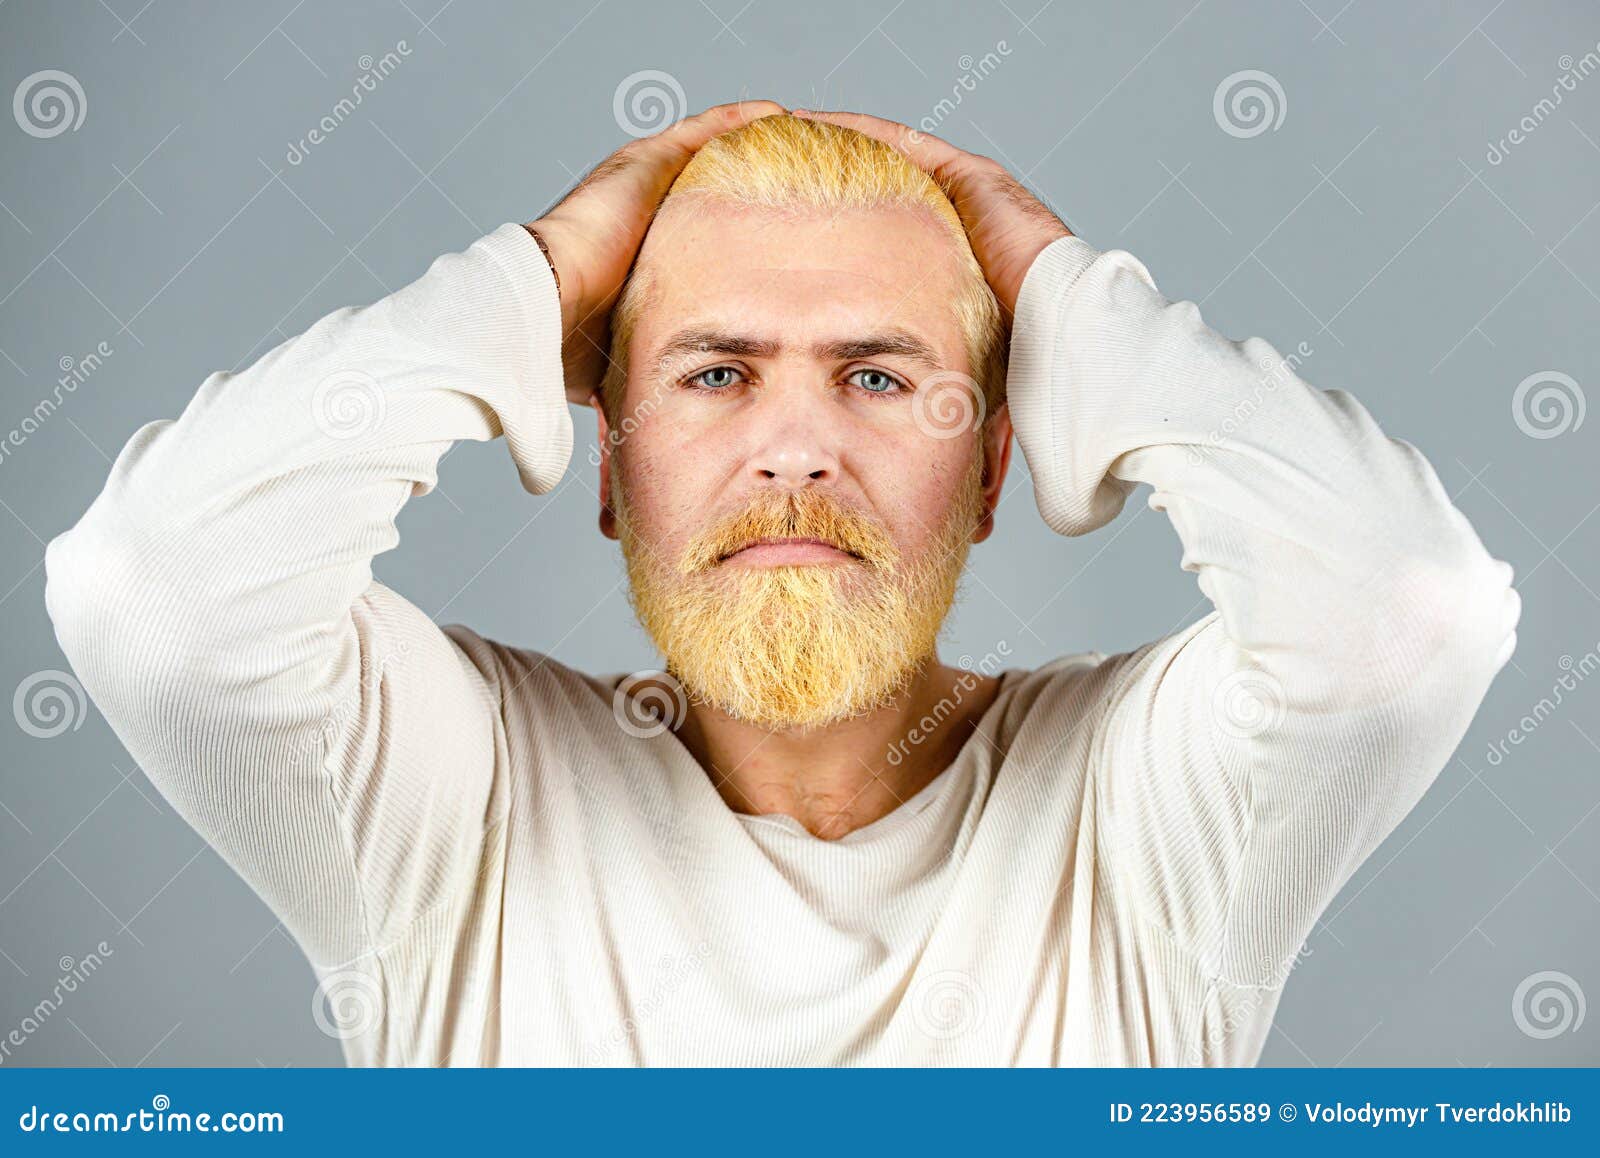 Blonde man with long beard - wide 4